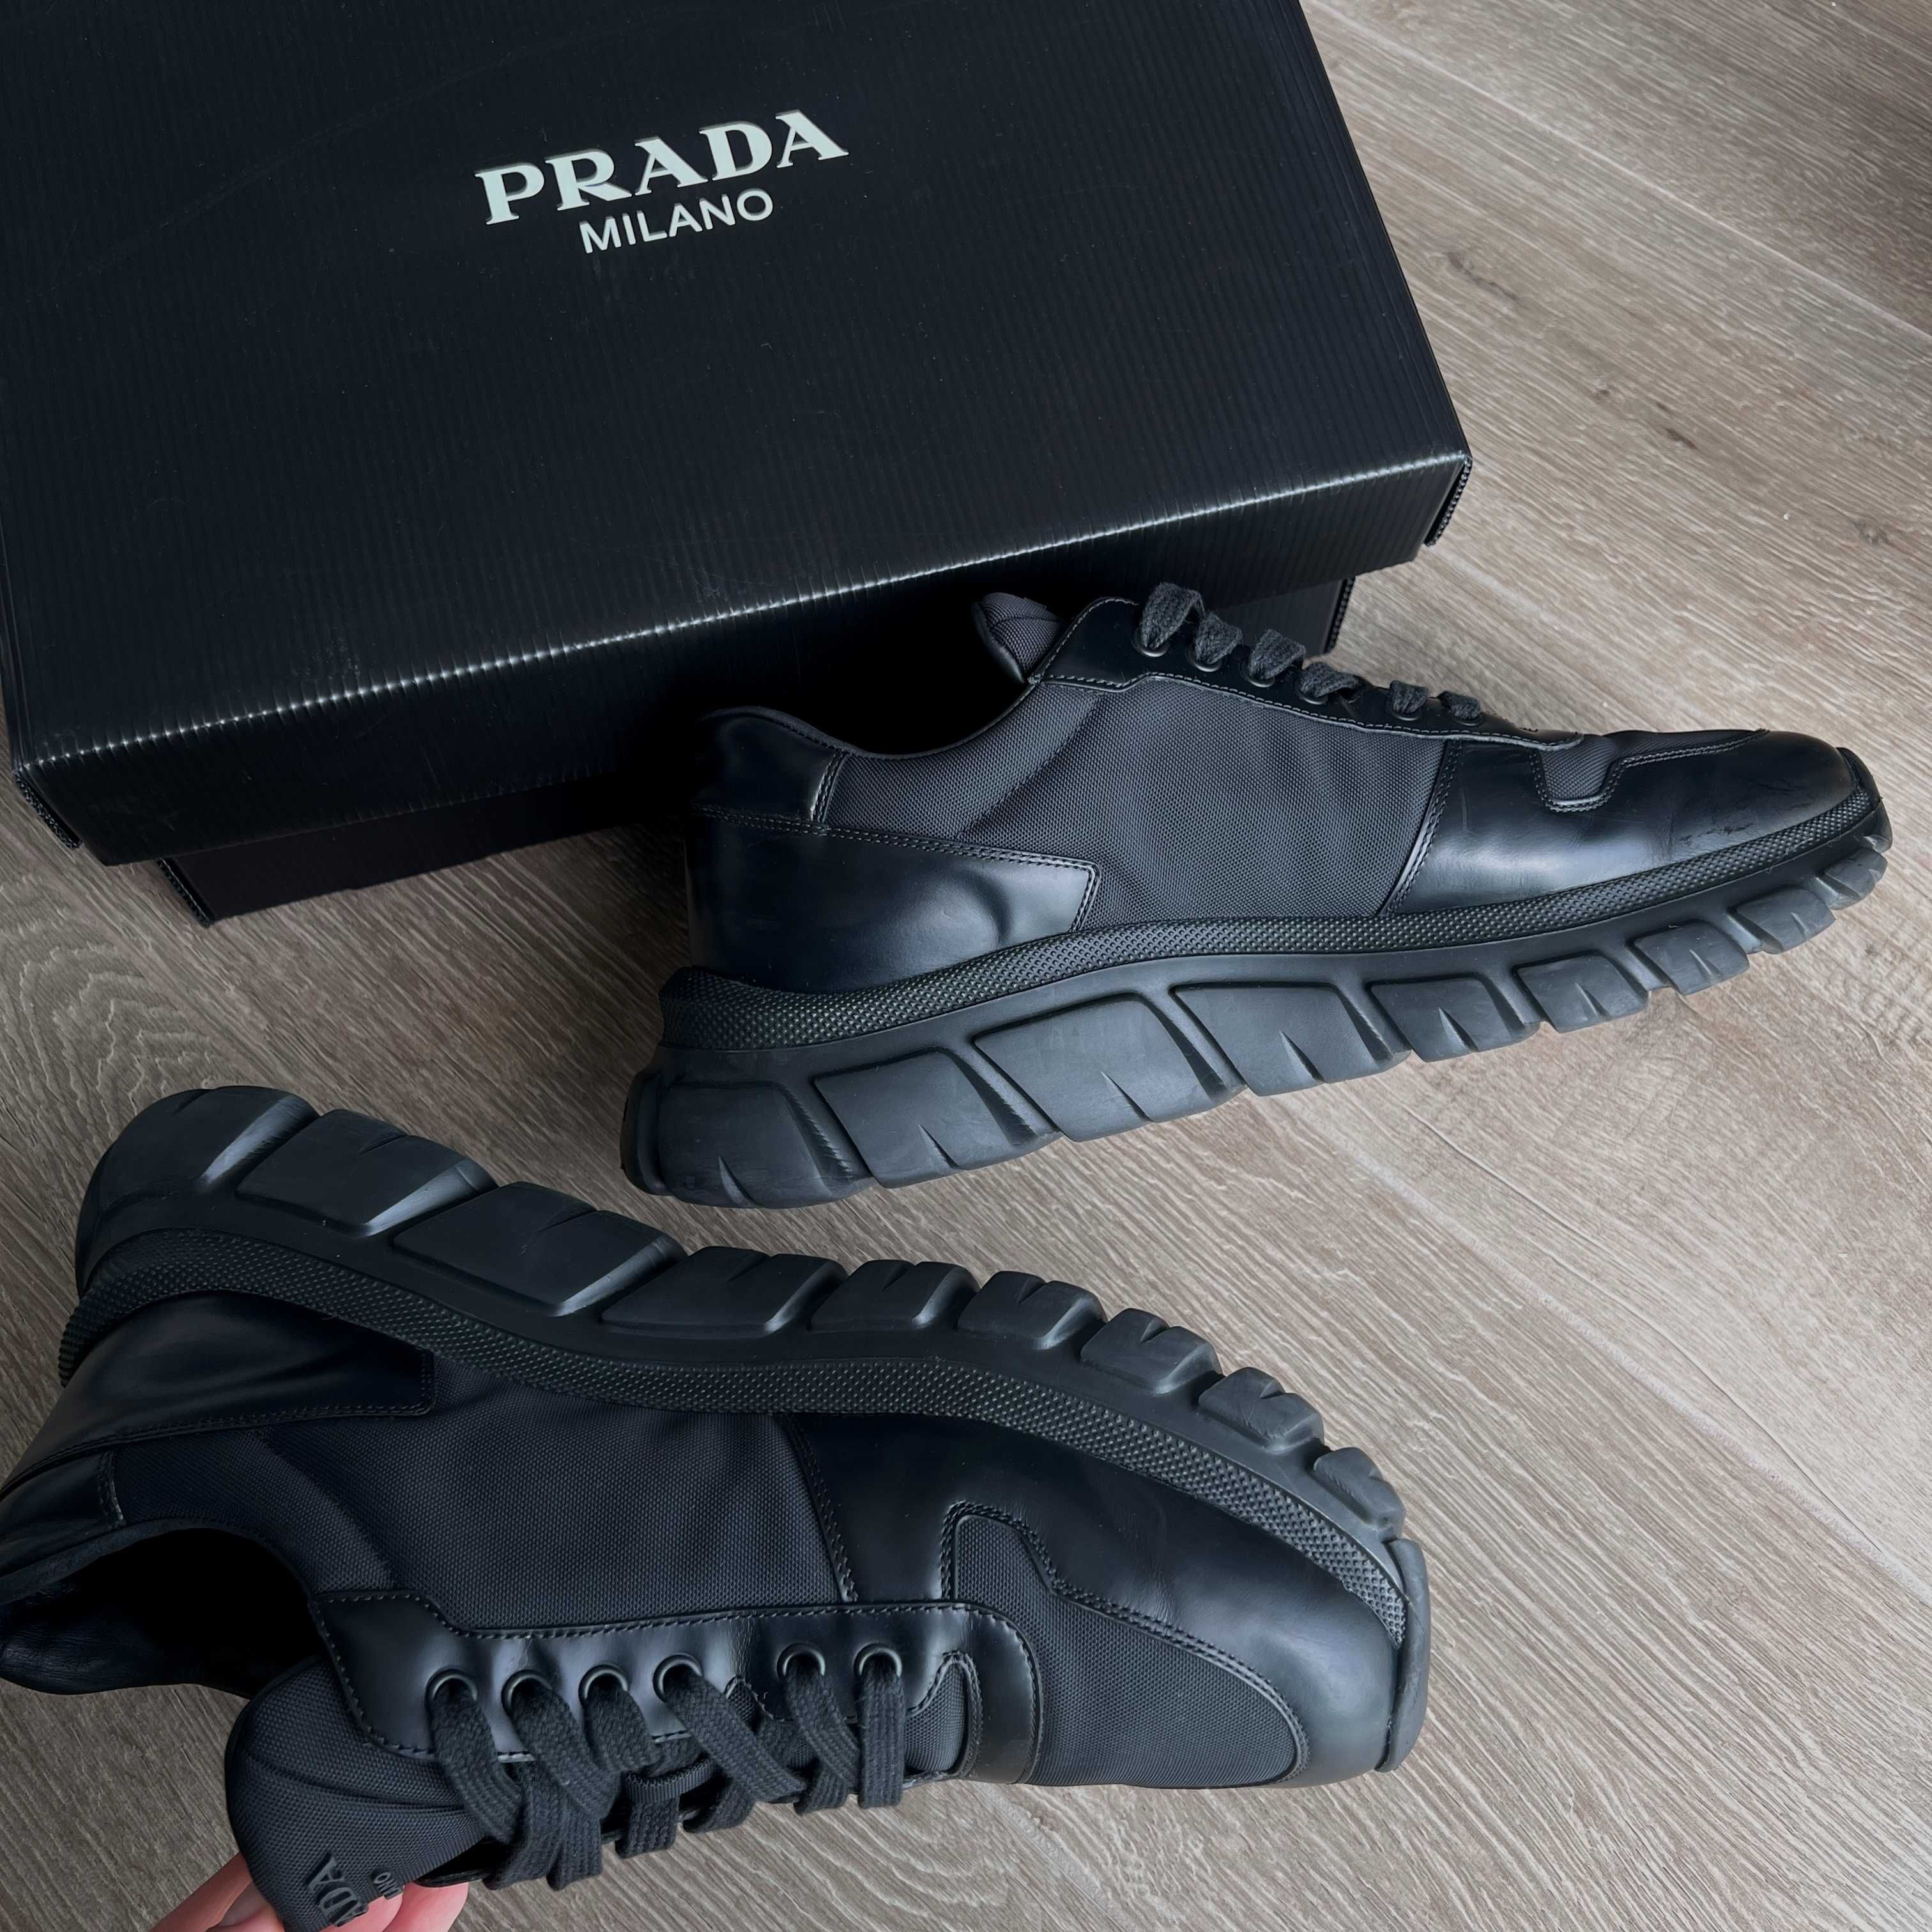 Adidasi Prada, originali, in stare buna, cu toate actele si geanta